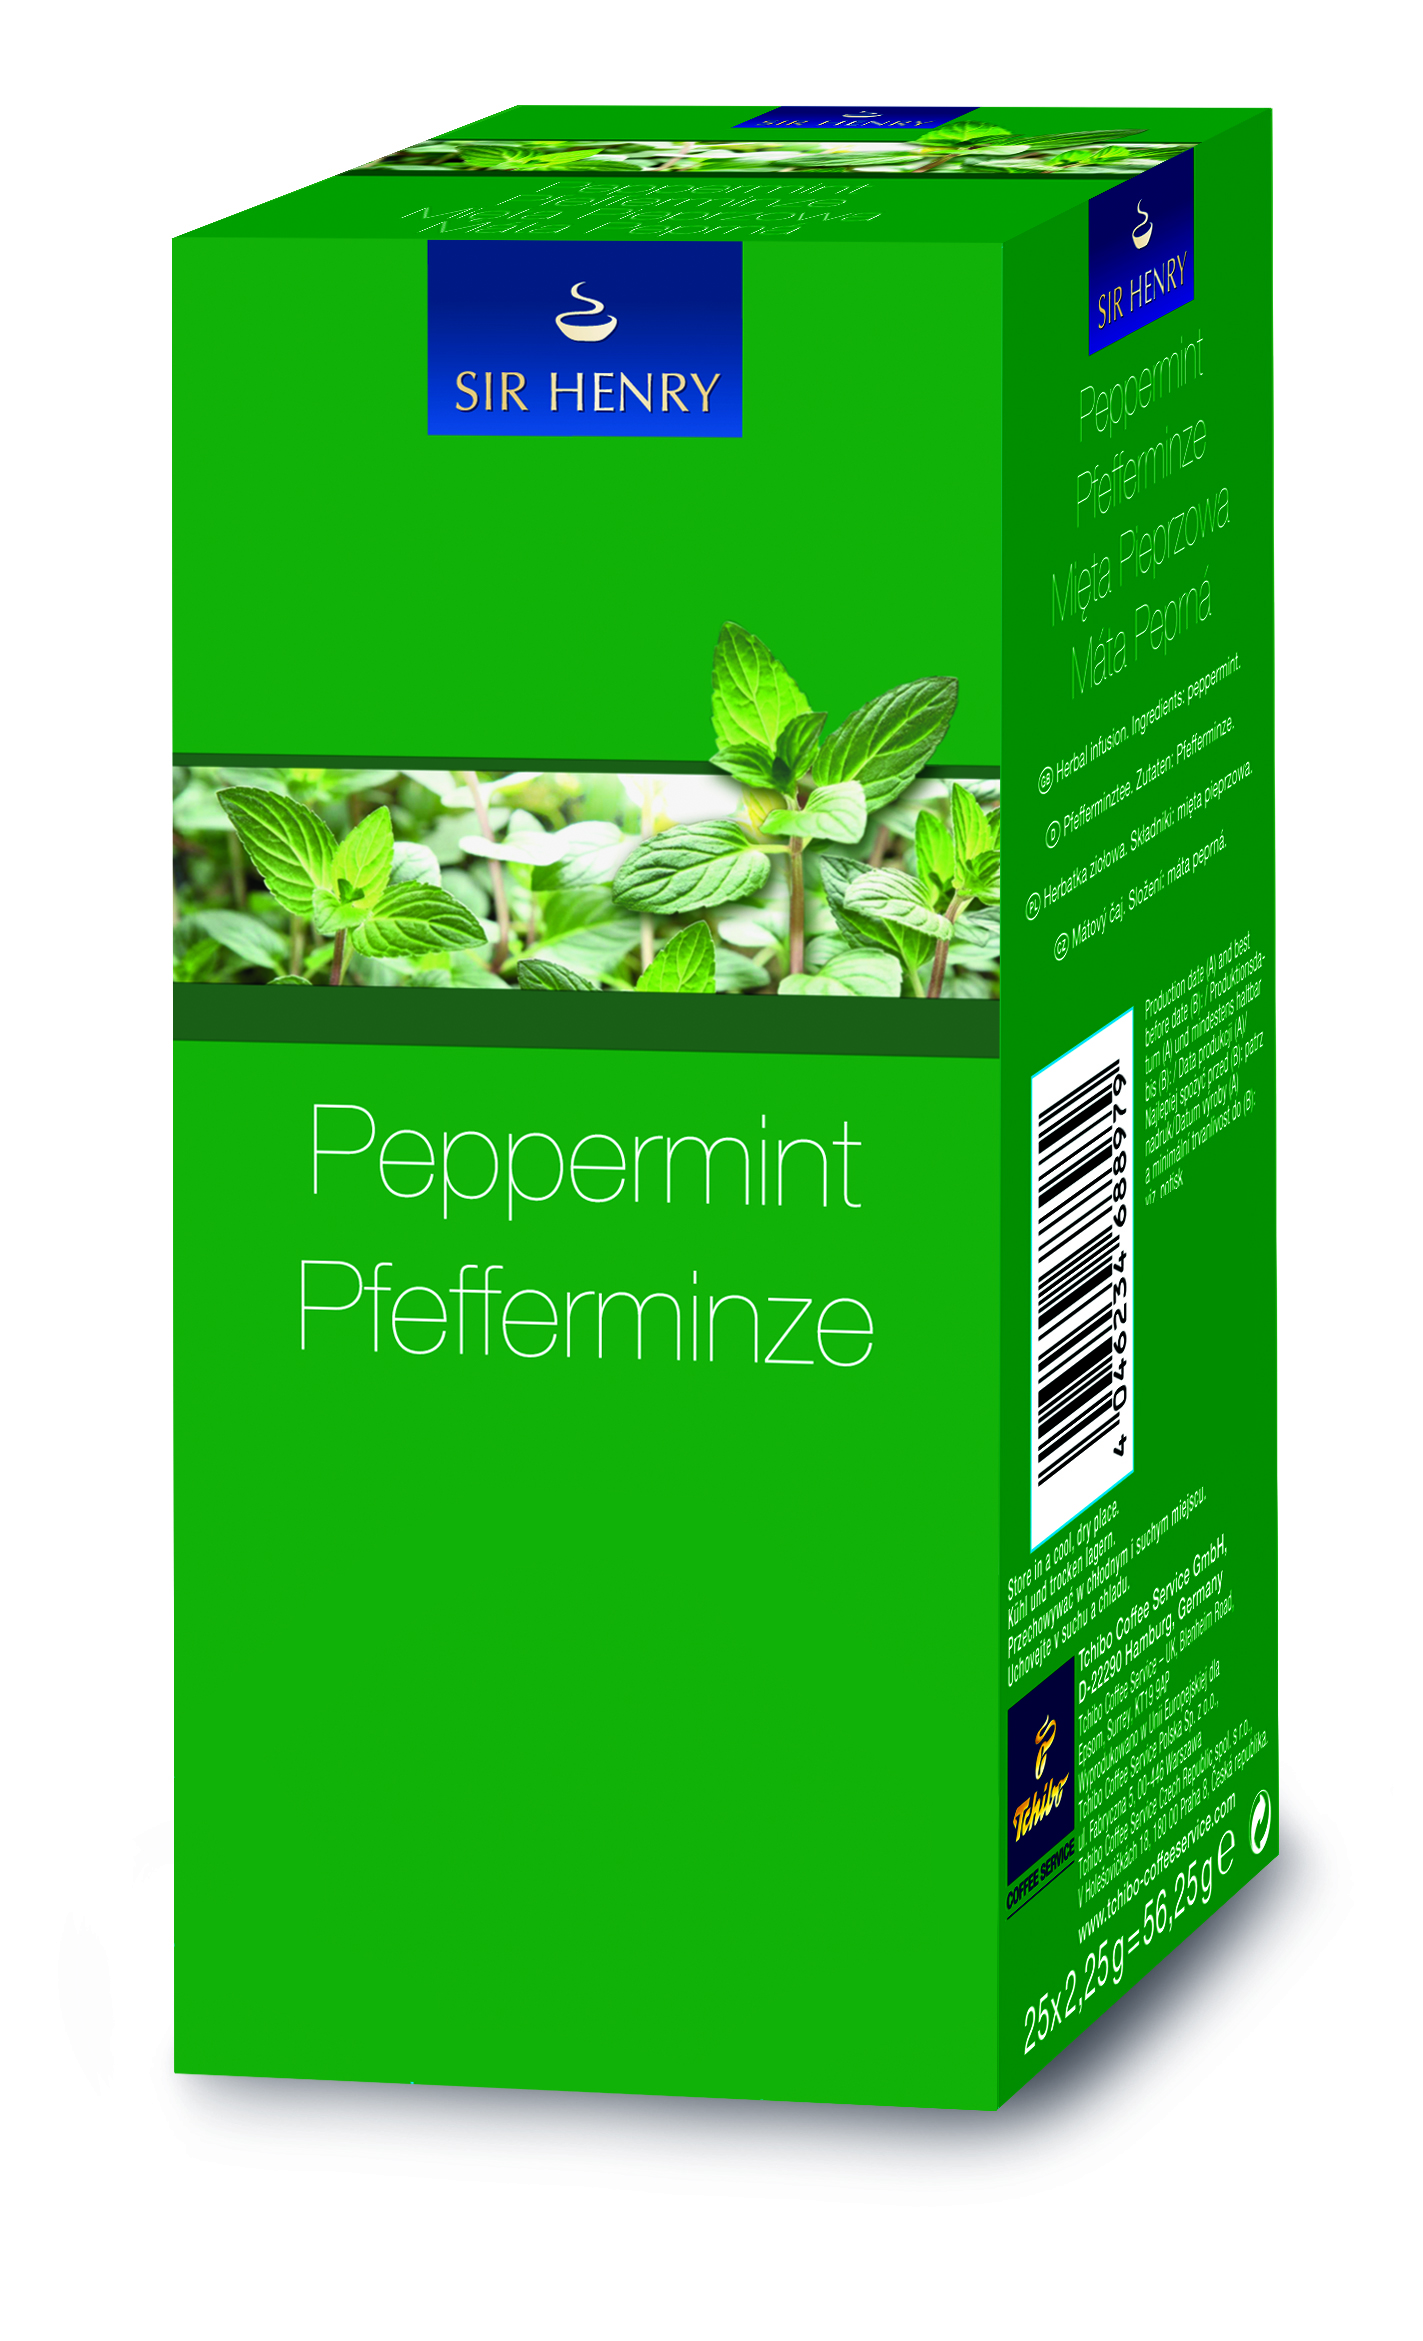 “Peppermint”